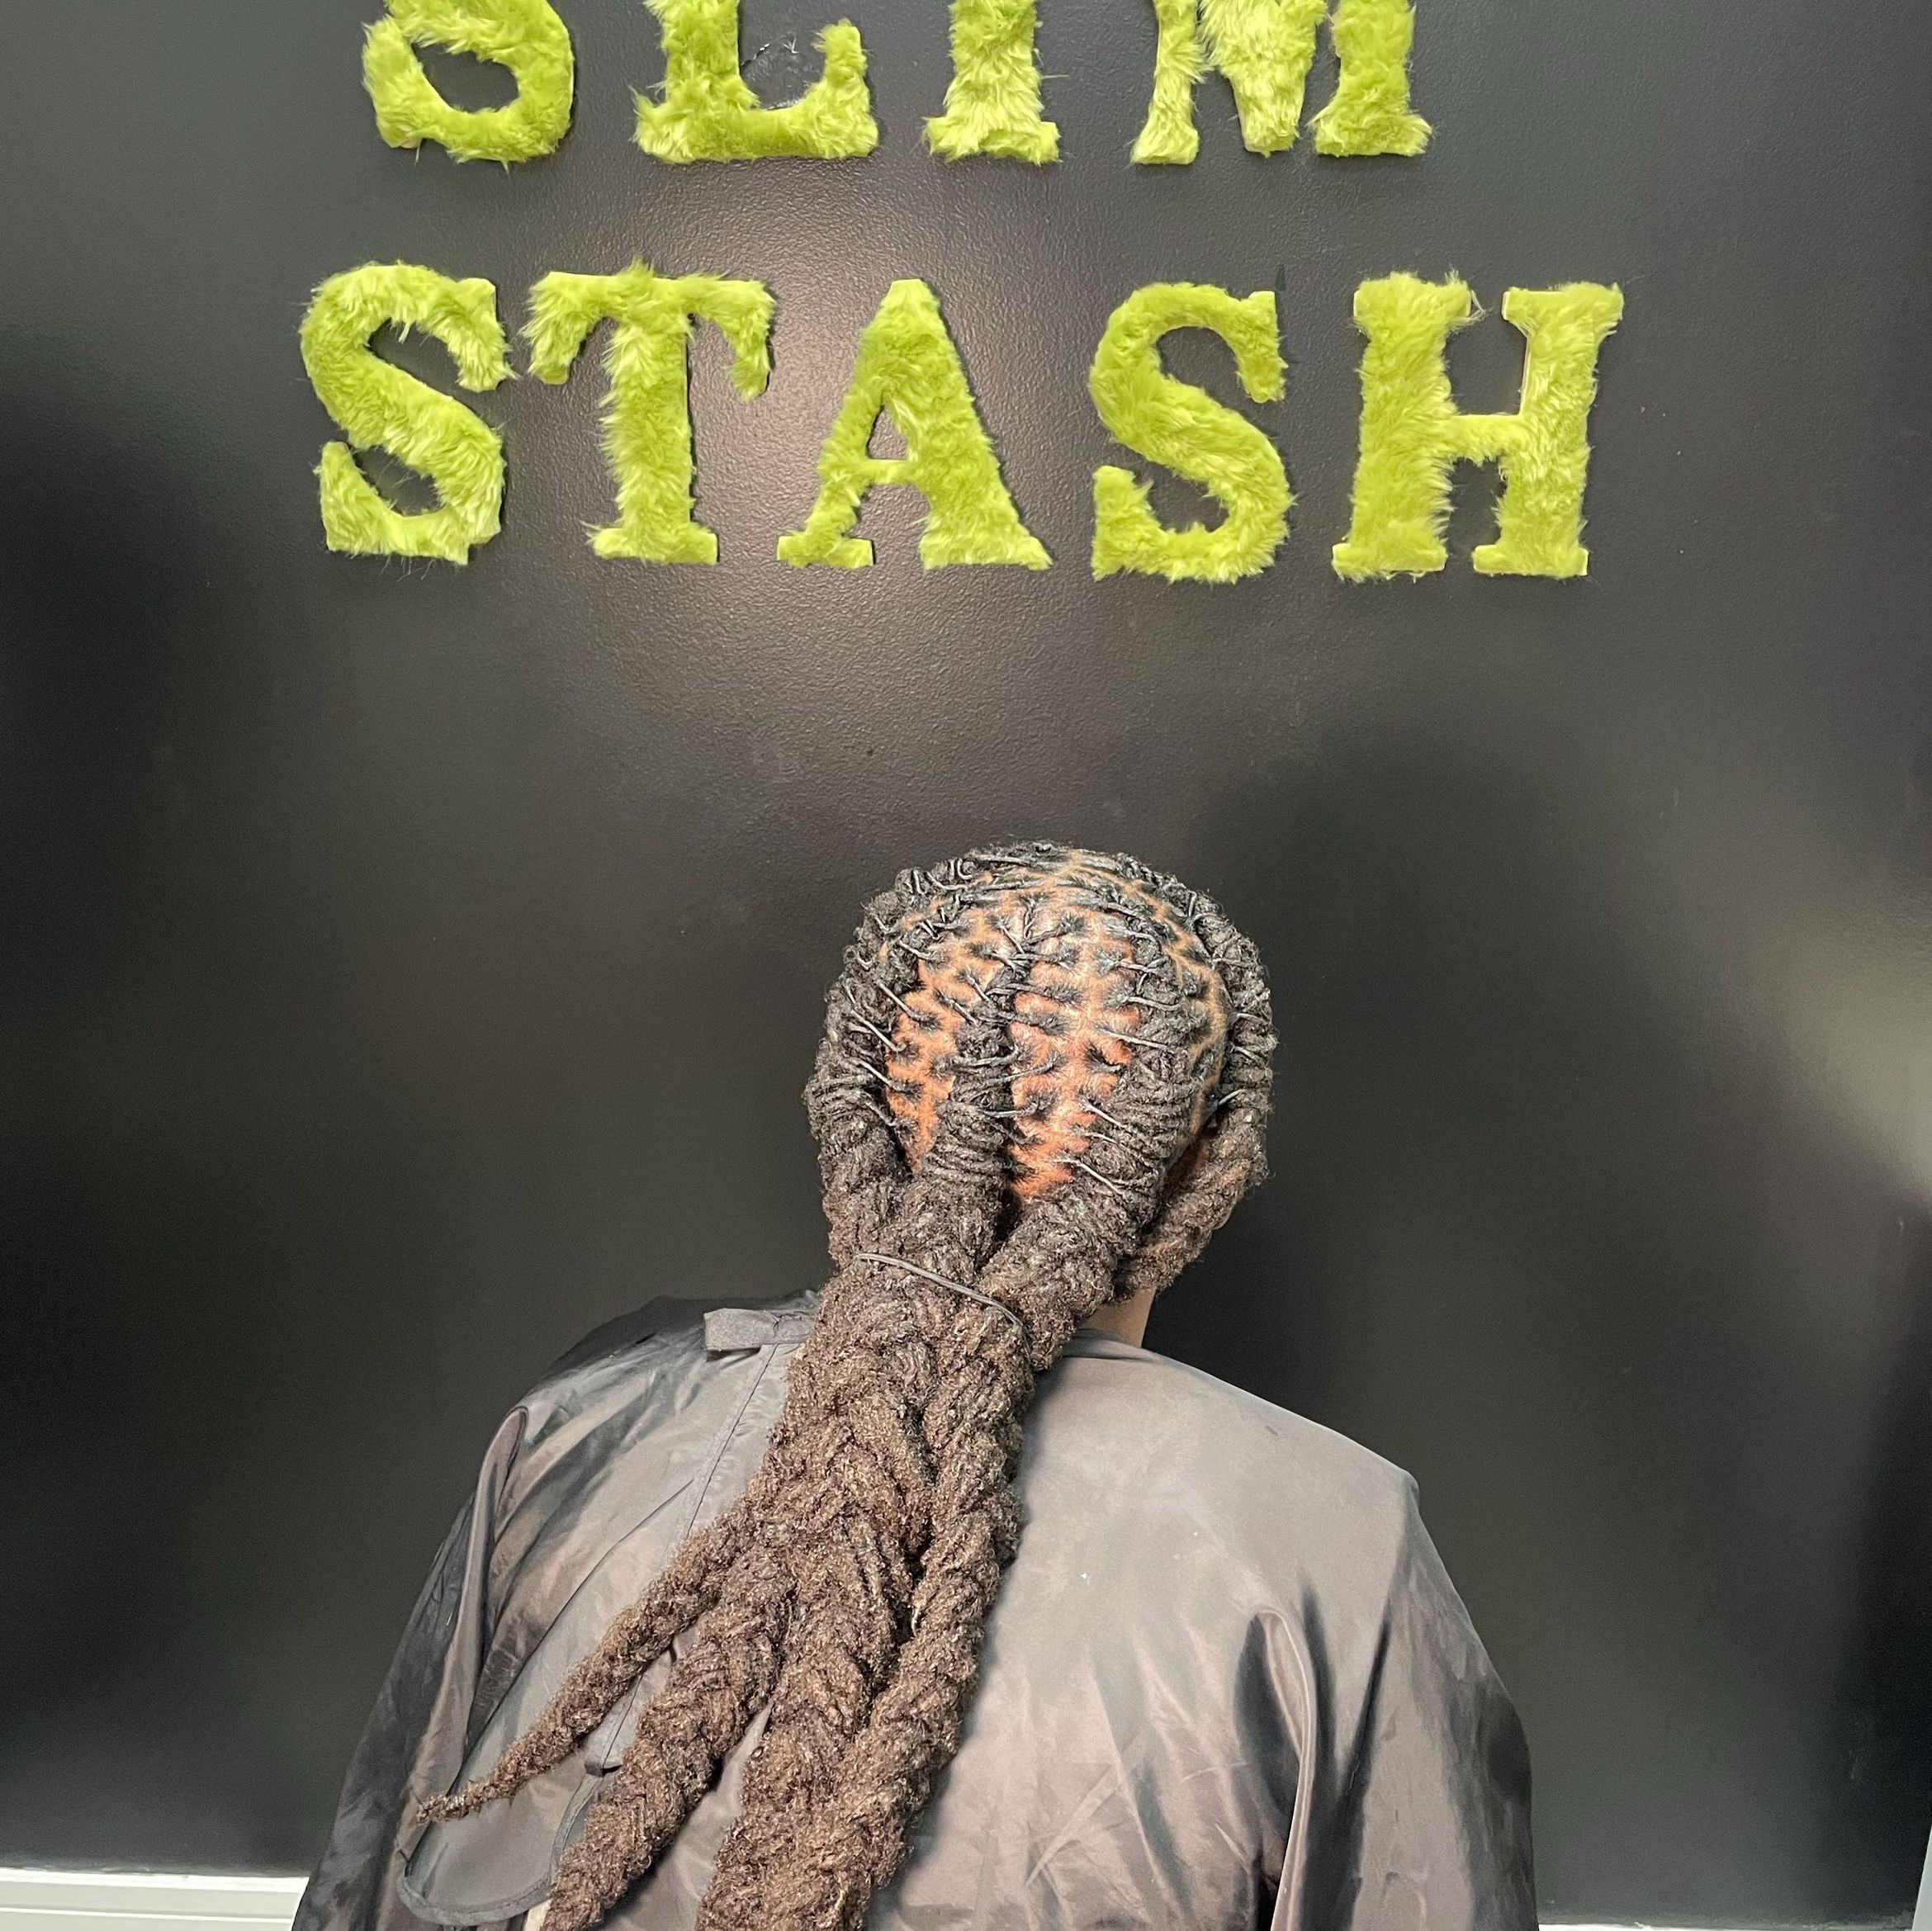 Slims Stash, 11602 S Marshfield Ave, Chicago, 60643